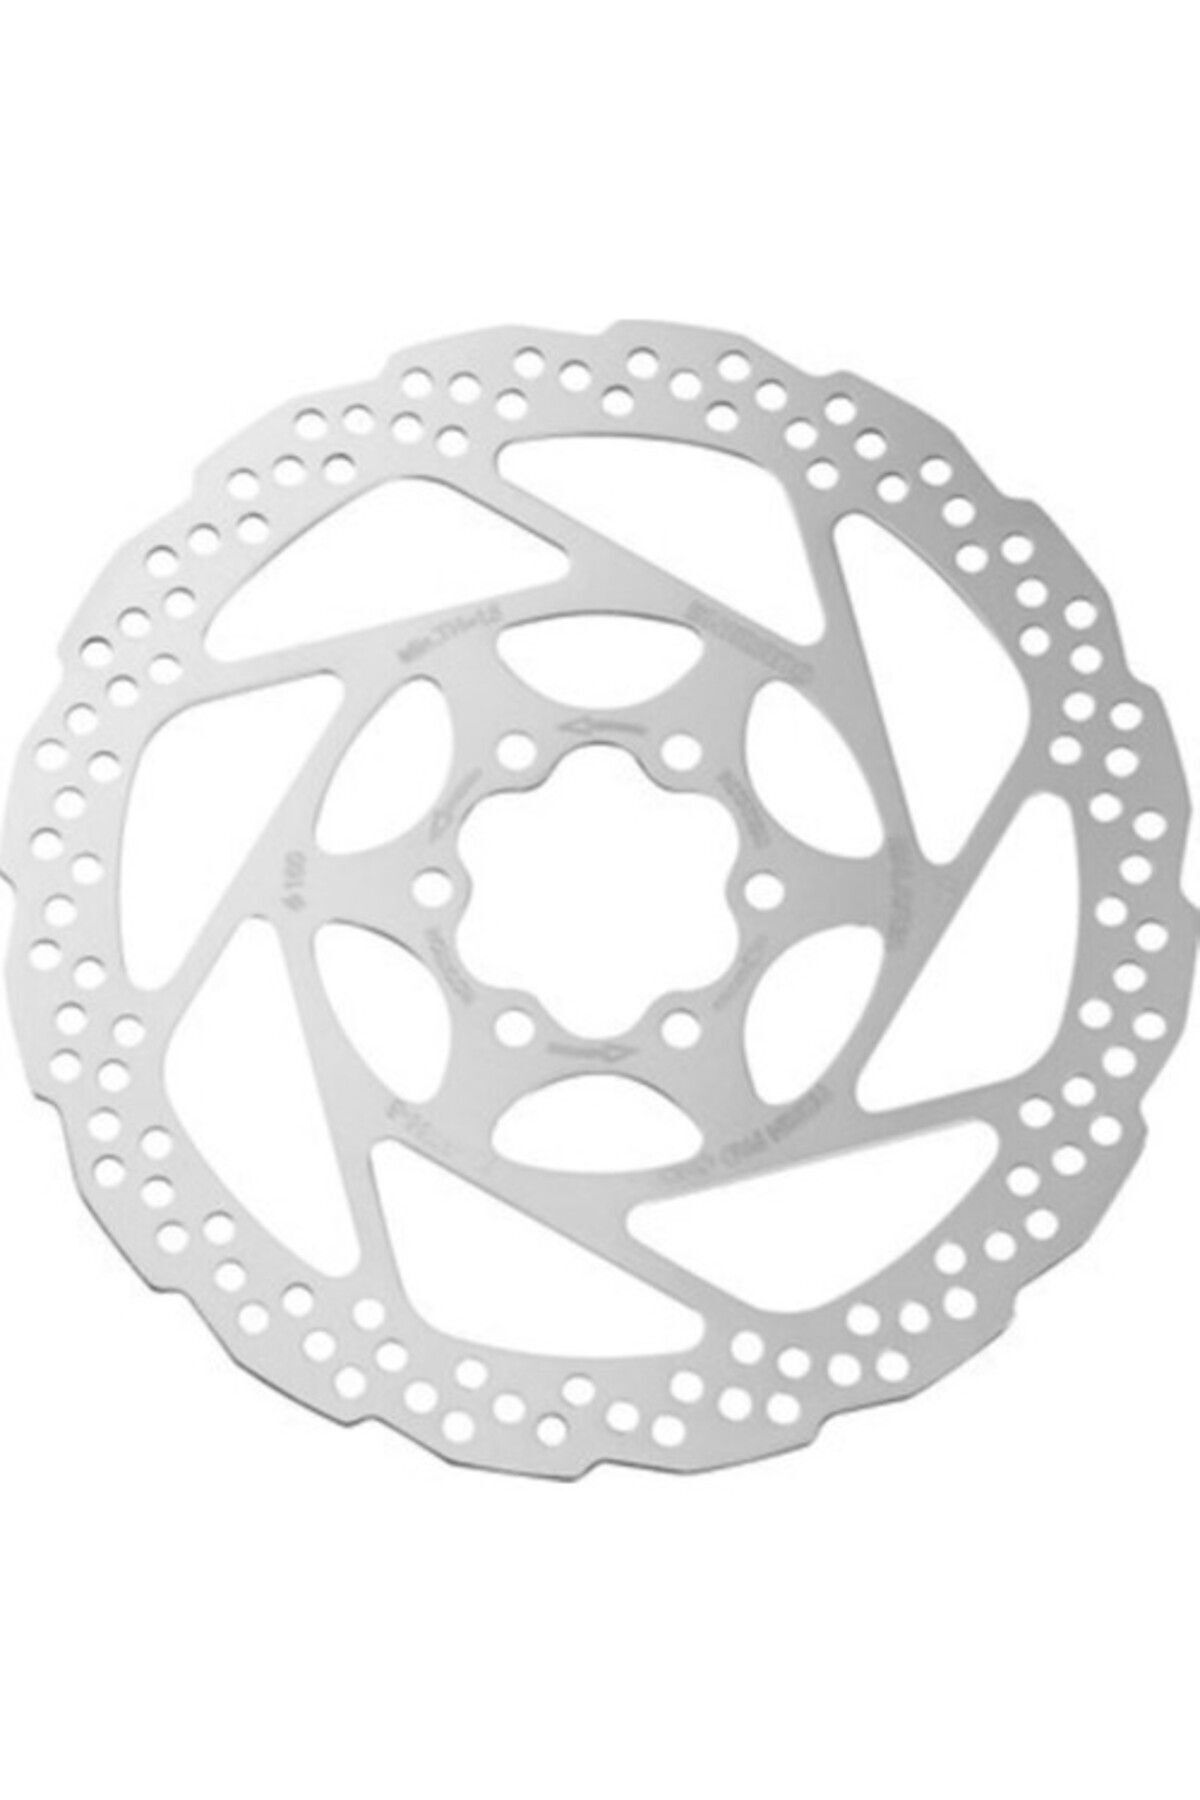 KNT Bisiklet Disk Fren Rotor Ayna 160 Mm 6 Vida Shımano Uyumlu